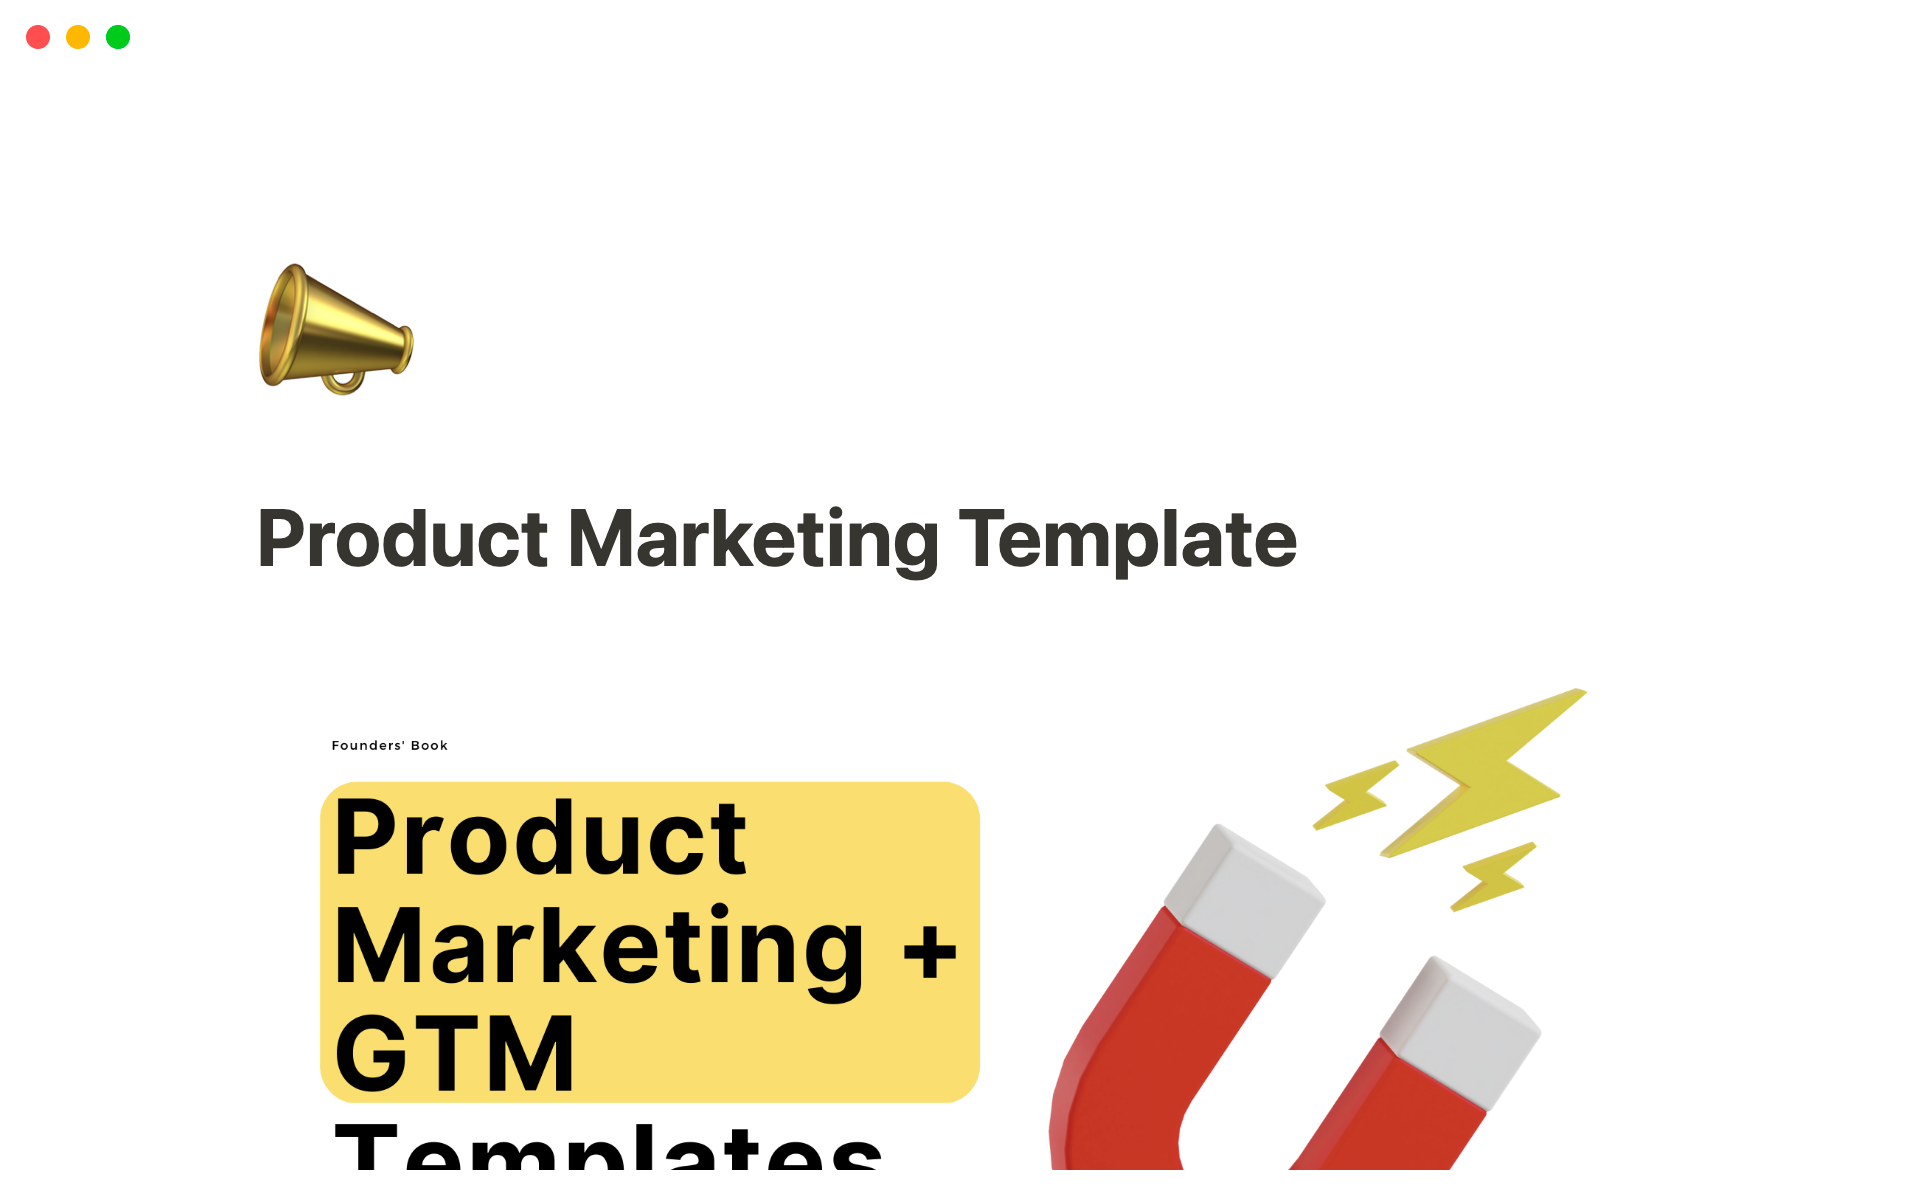 Product Marketing + GTM Templateのテンプレートのプレビュー